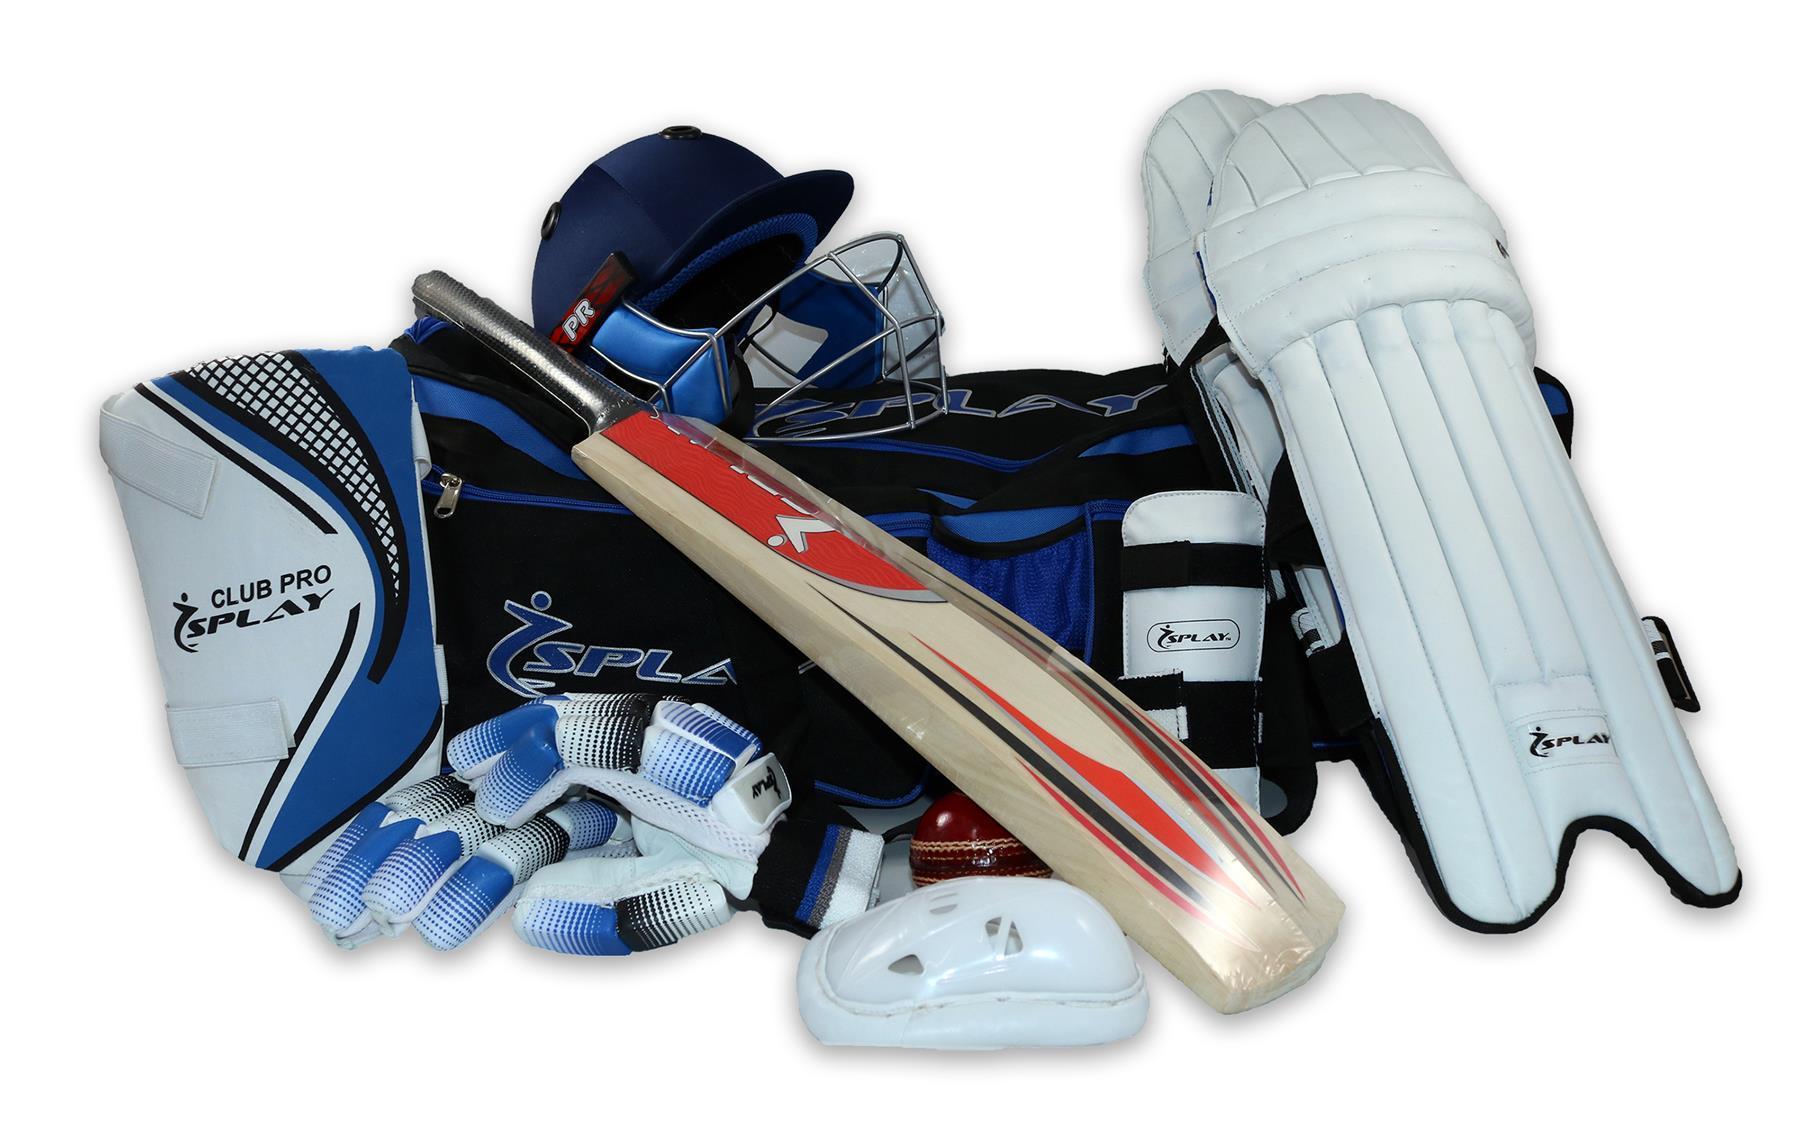 Boys Kids Complete Cricket Kit Set Bat Ball Pads Helmet Guards Bag Splay (UK) Limited